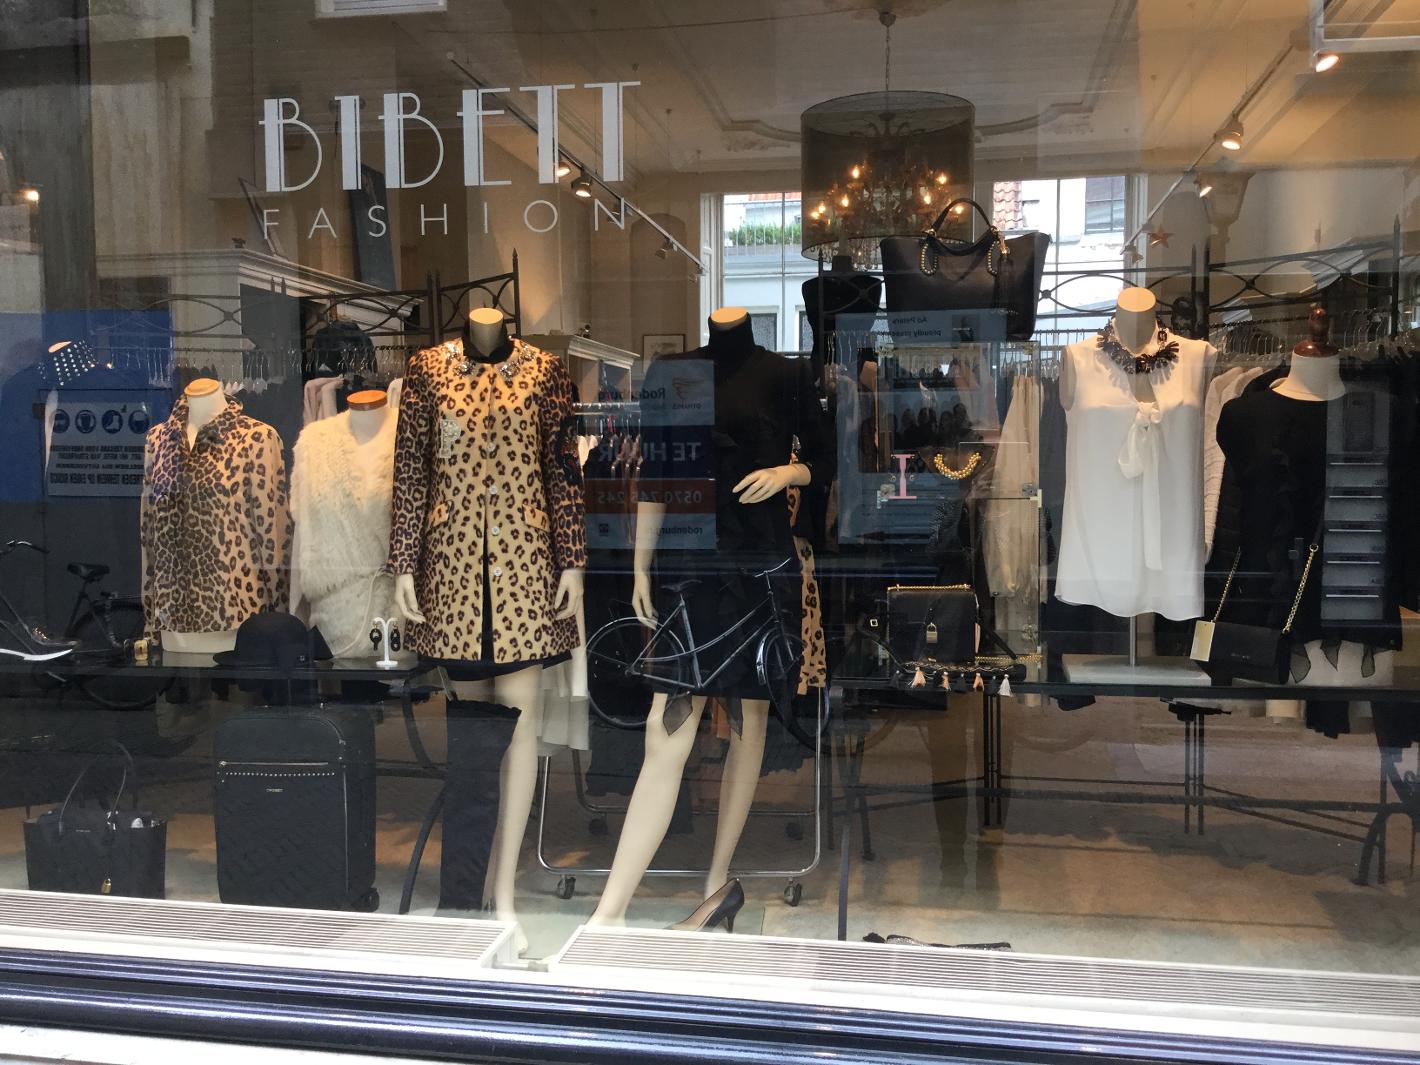 Foto Bibett in Deventer, Winkelen, Gezellig shoppen - #5